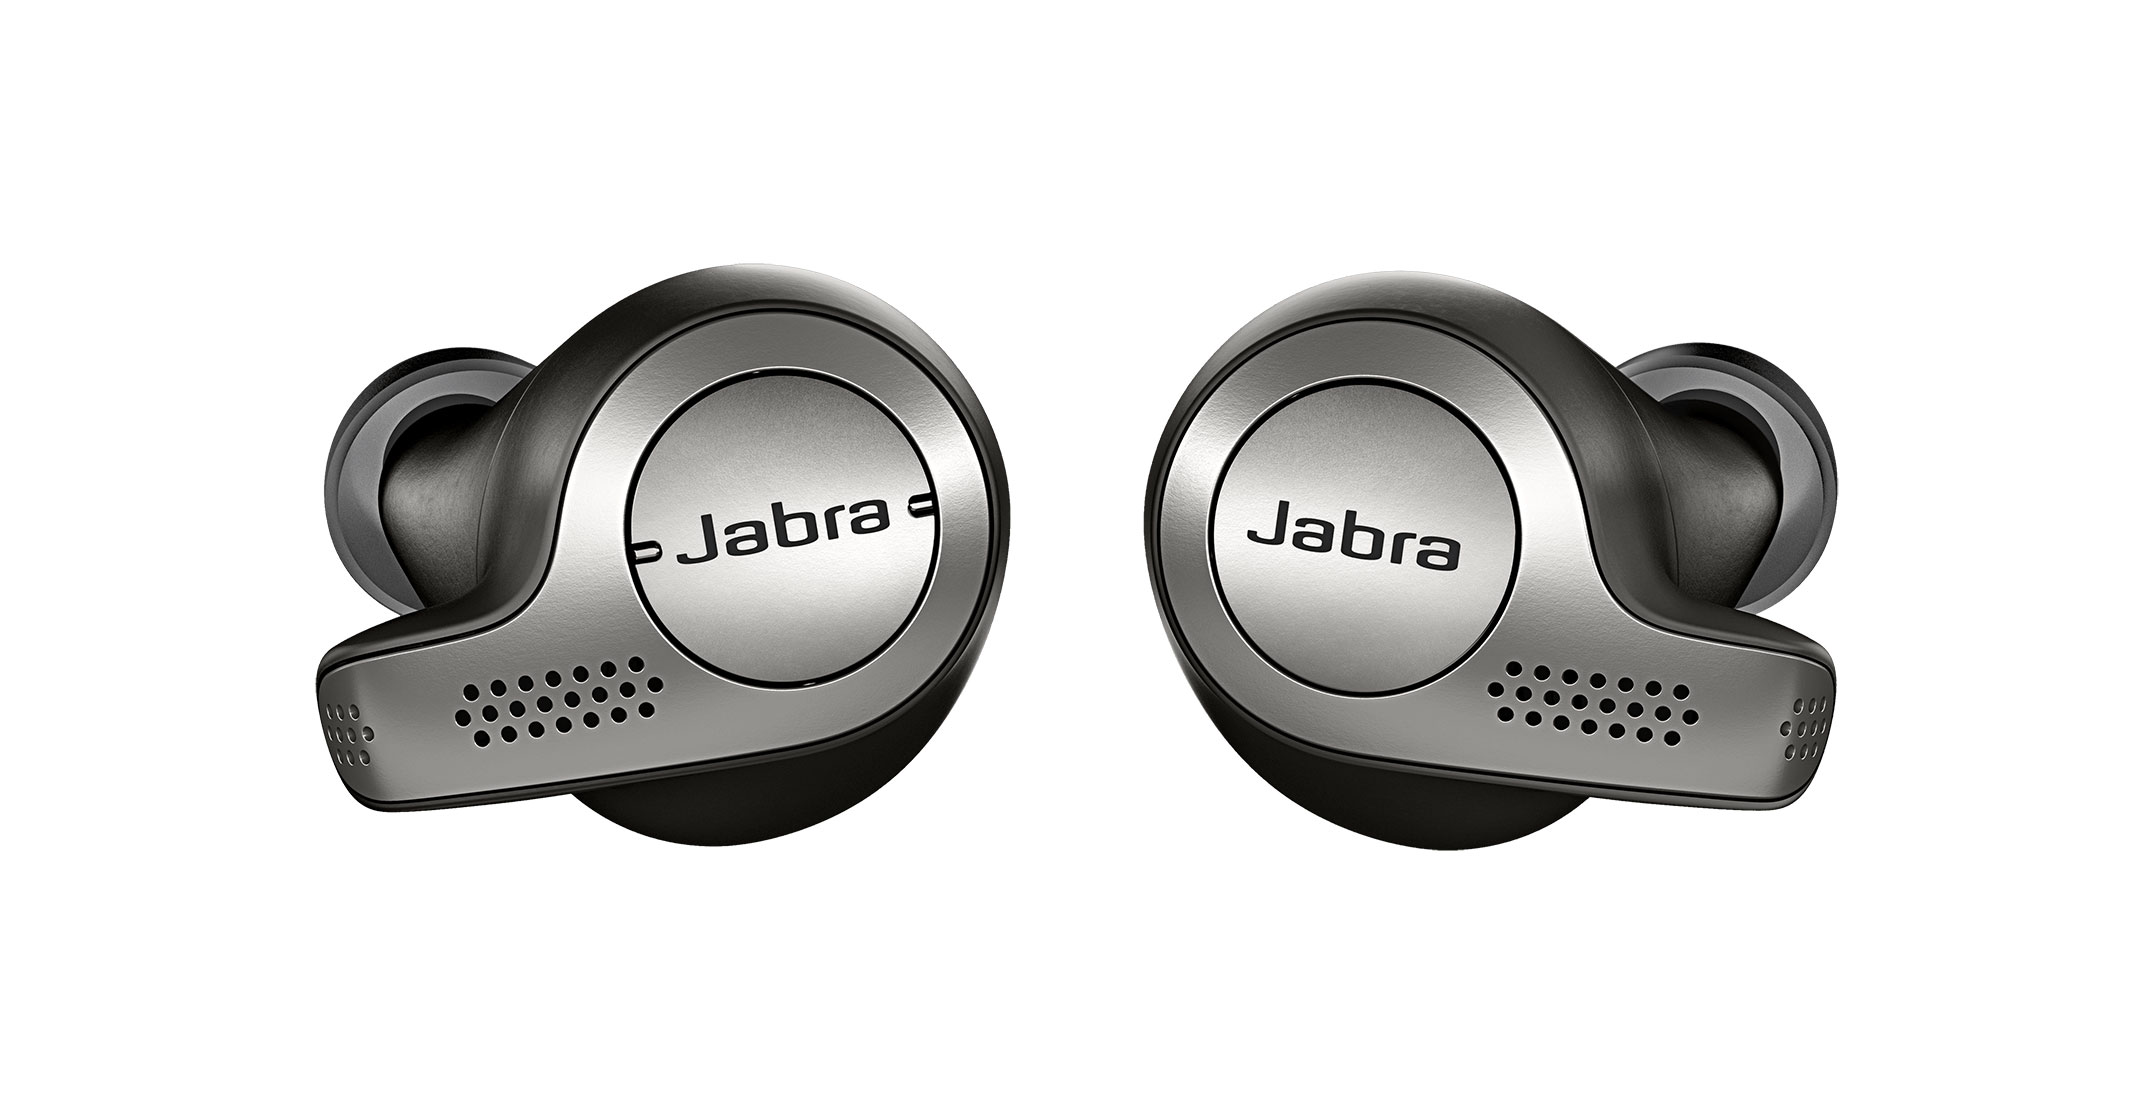 Jabra Elite Sport True Wireless Headphones review